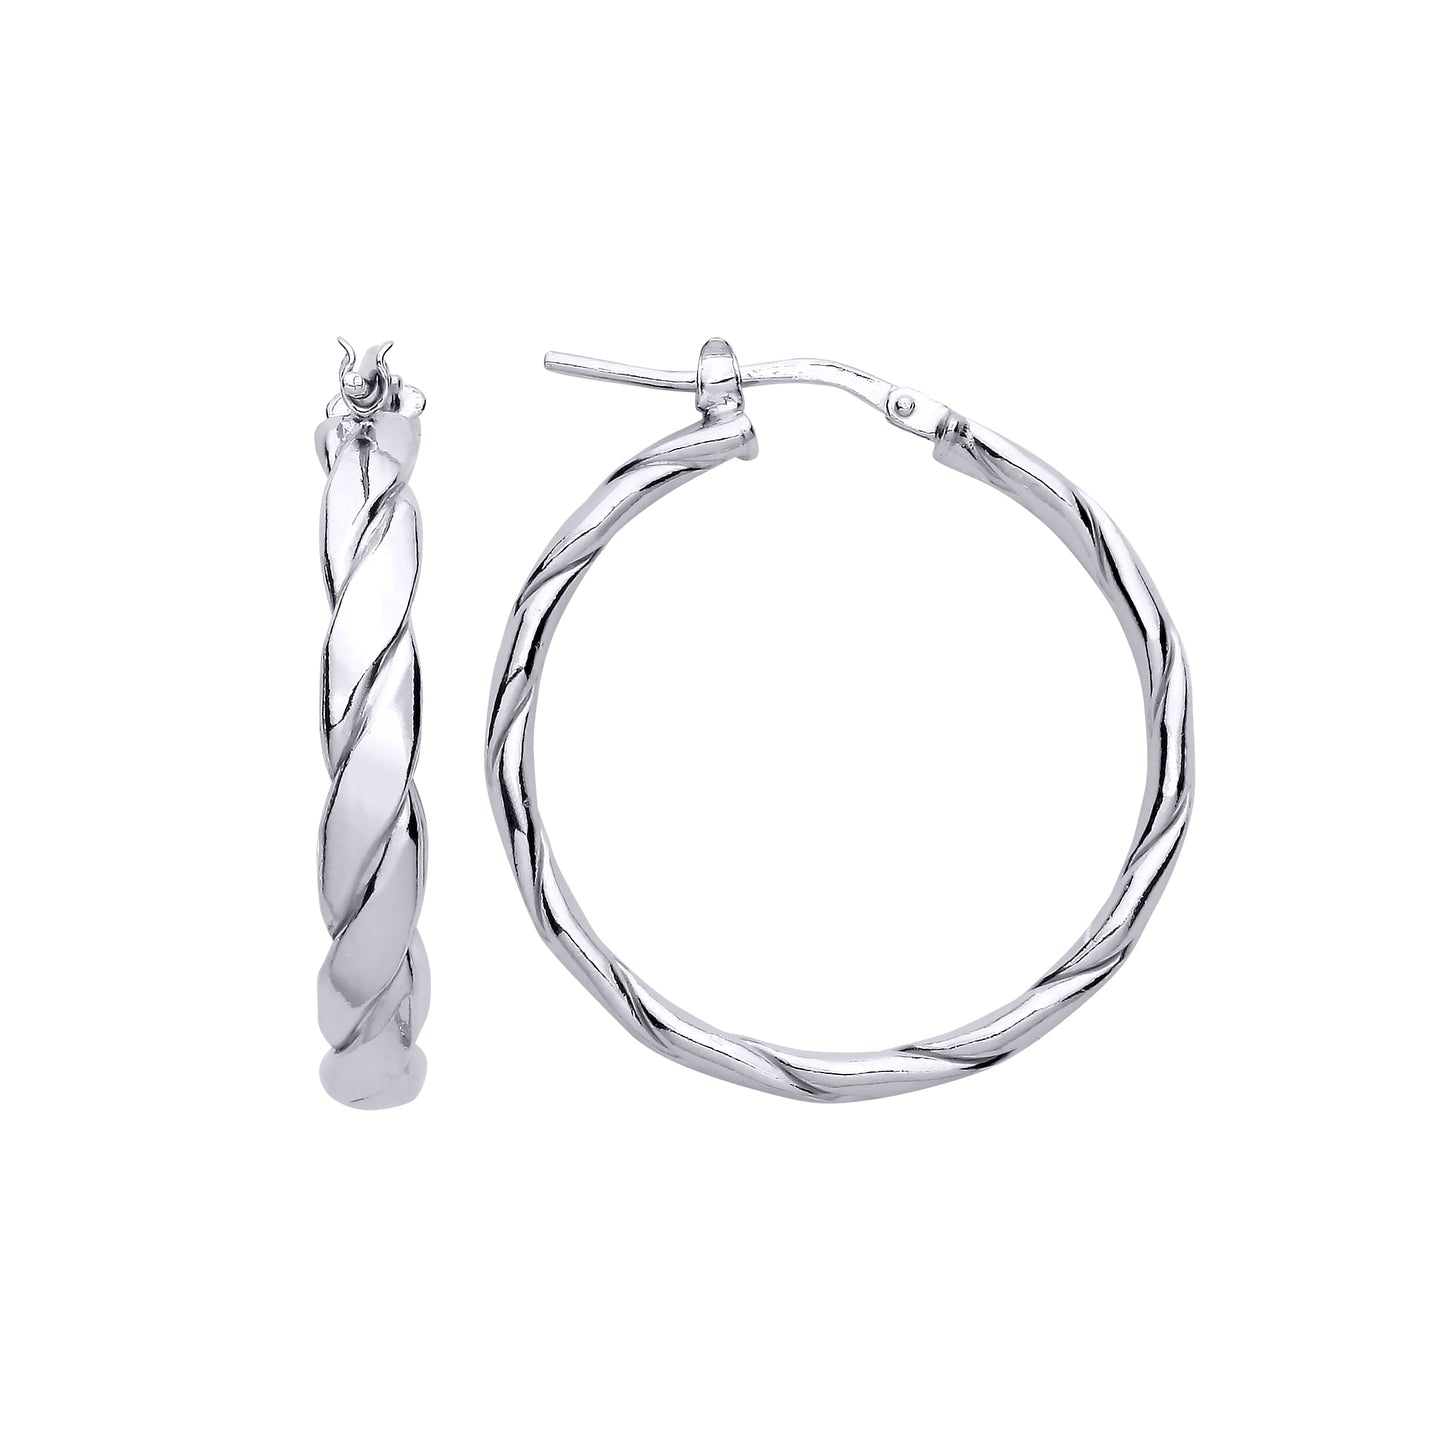 Silver  Plaited Chunky Twist Hoop Earrings 28mm 4mm - ER141